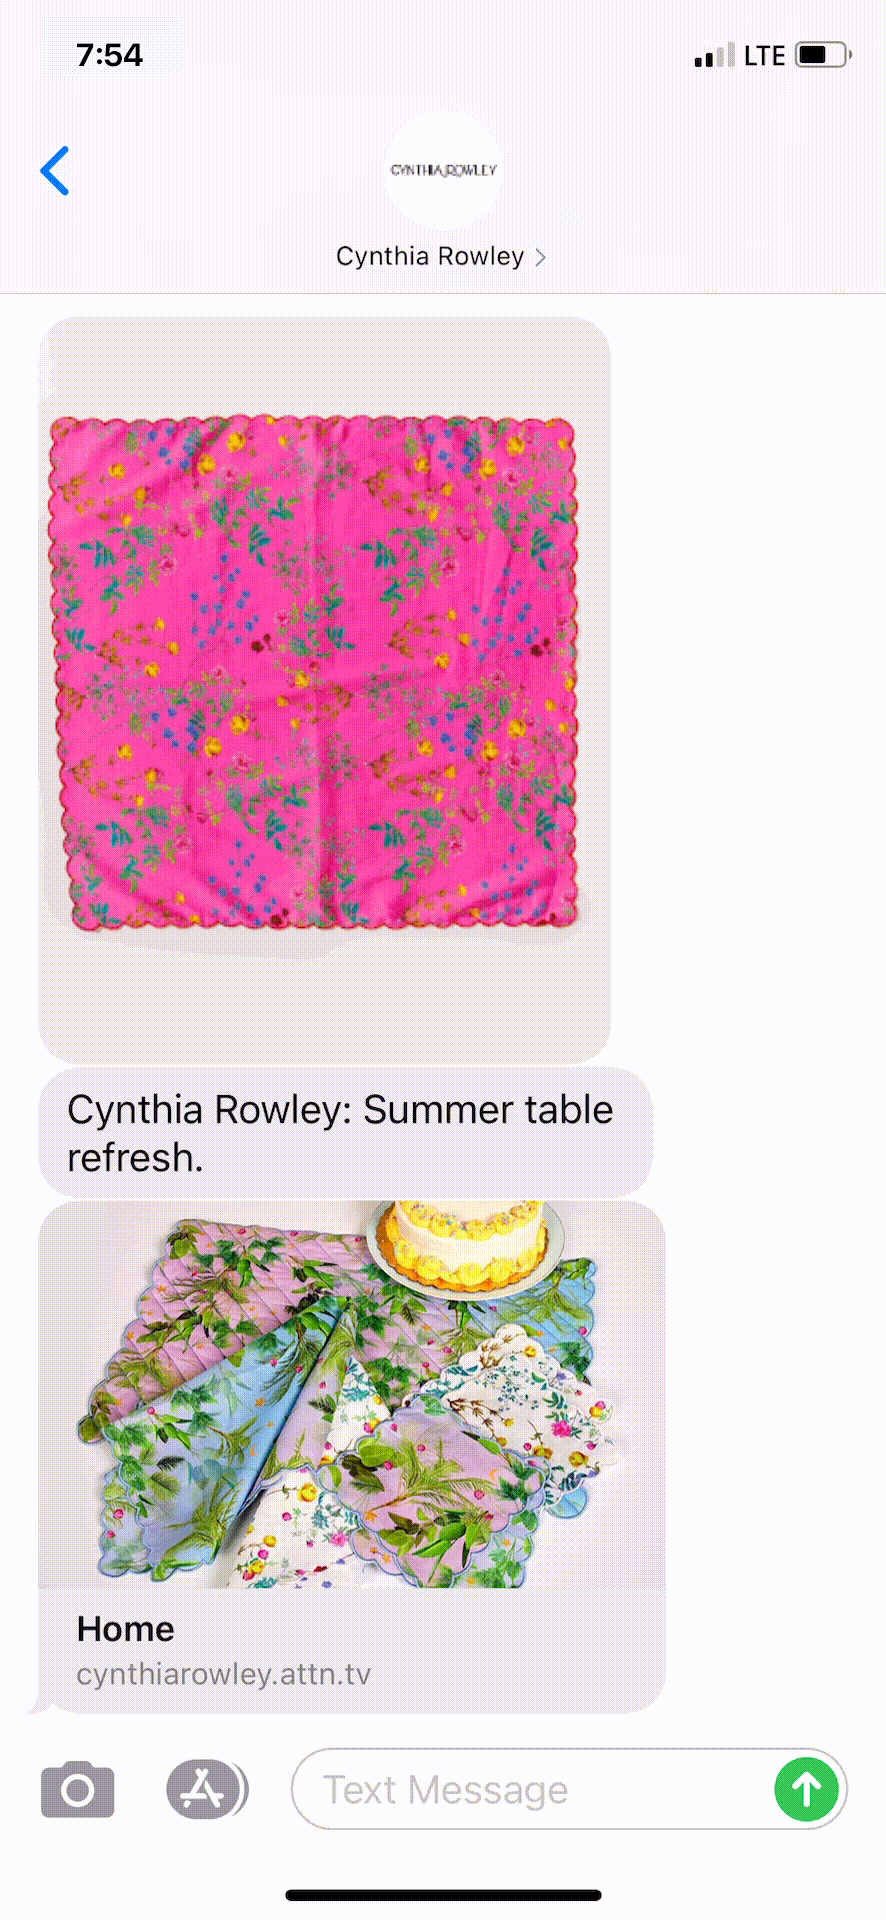 Cynthia-Rowley-Text-Message-Marketing-Example-05.19.2021